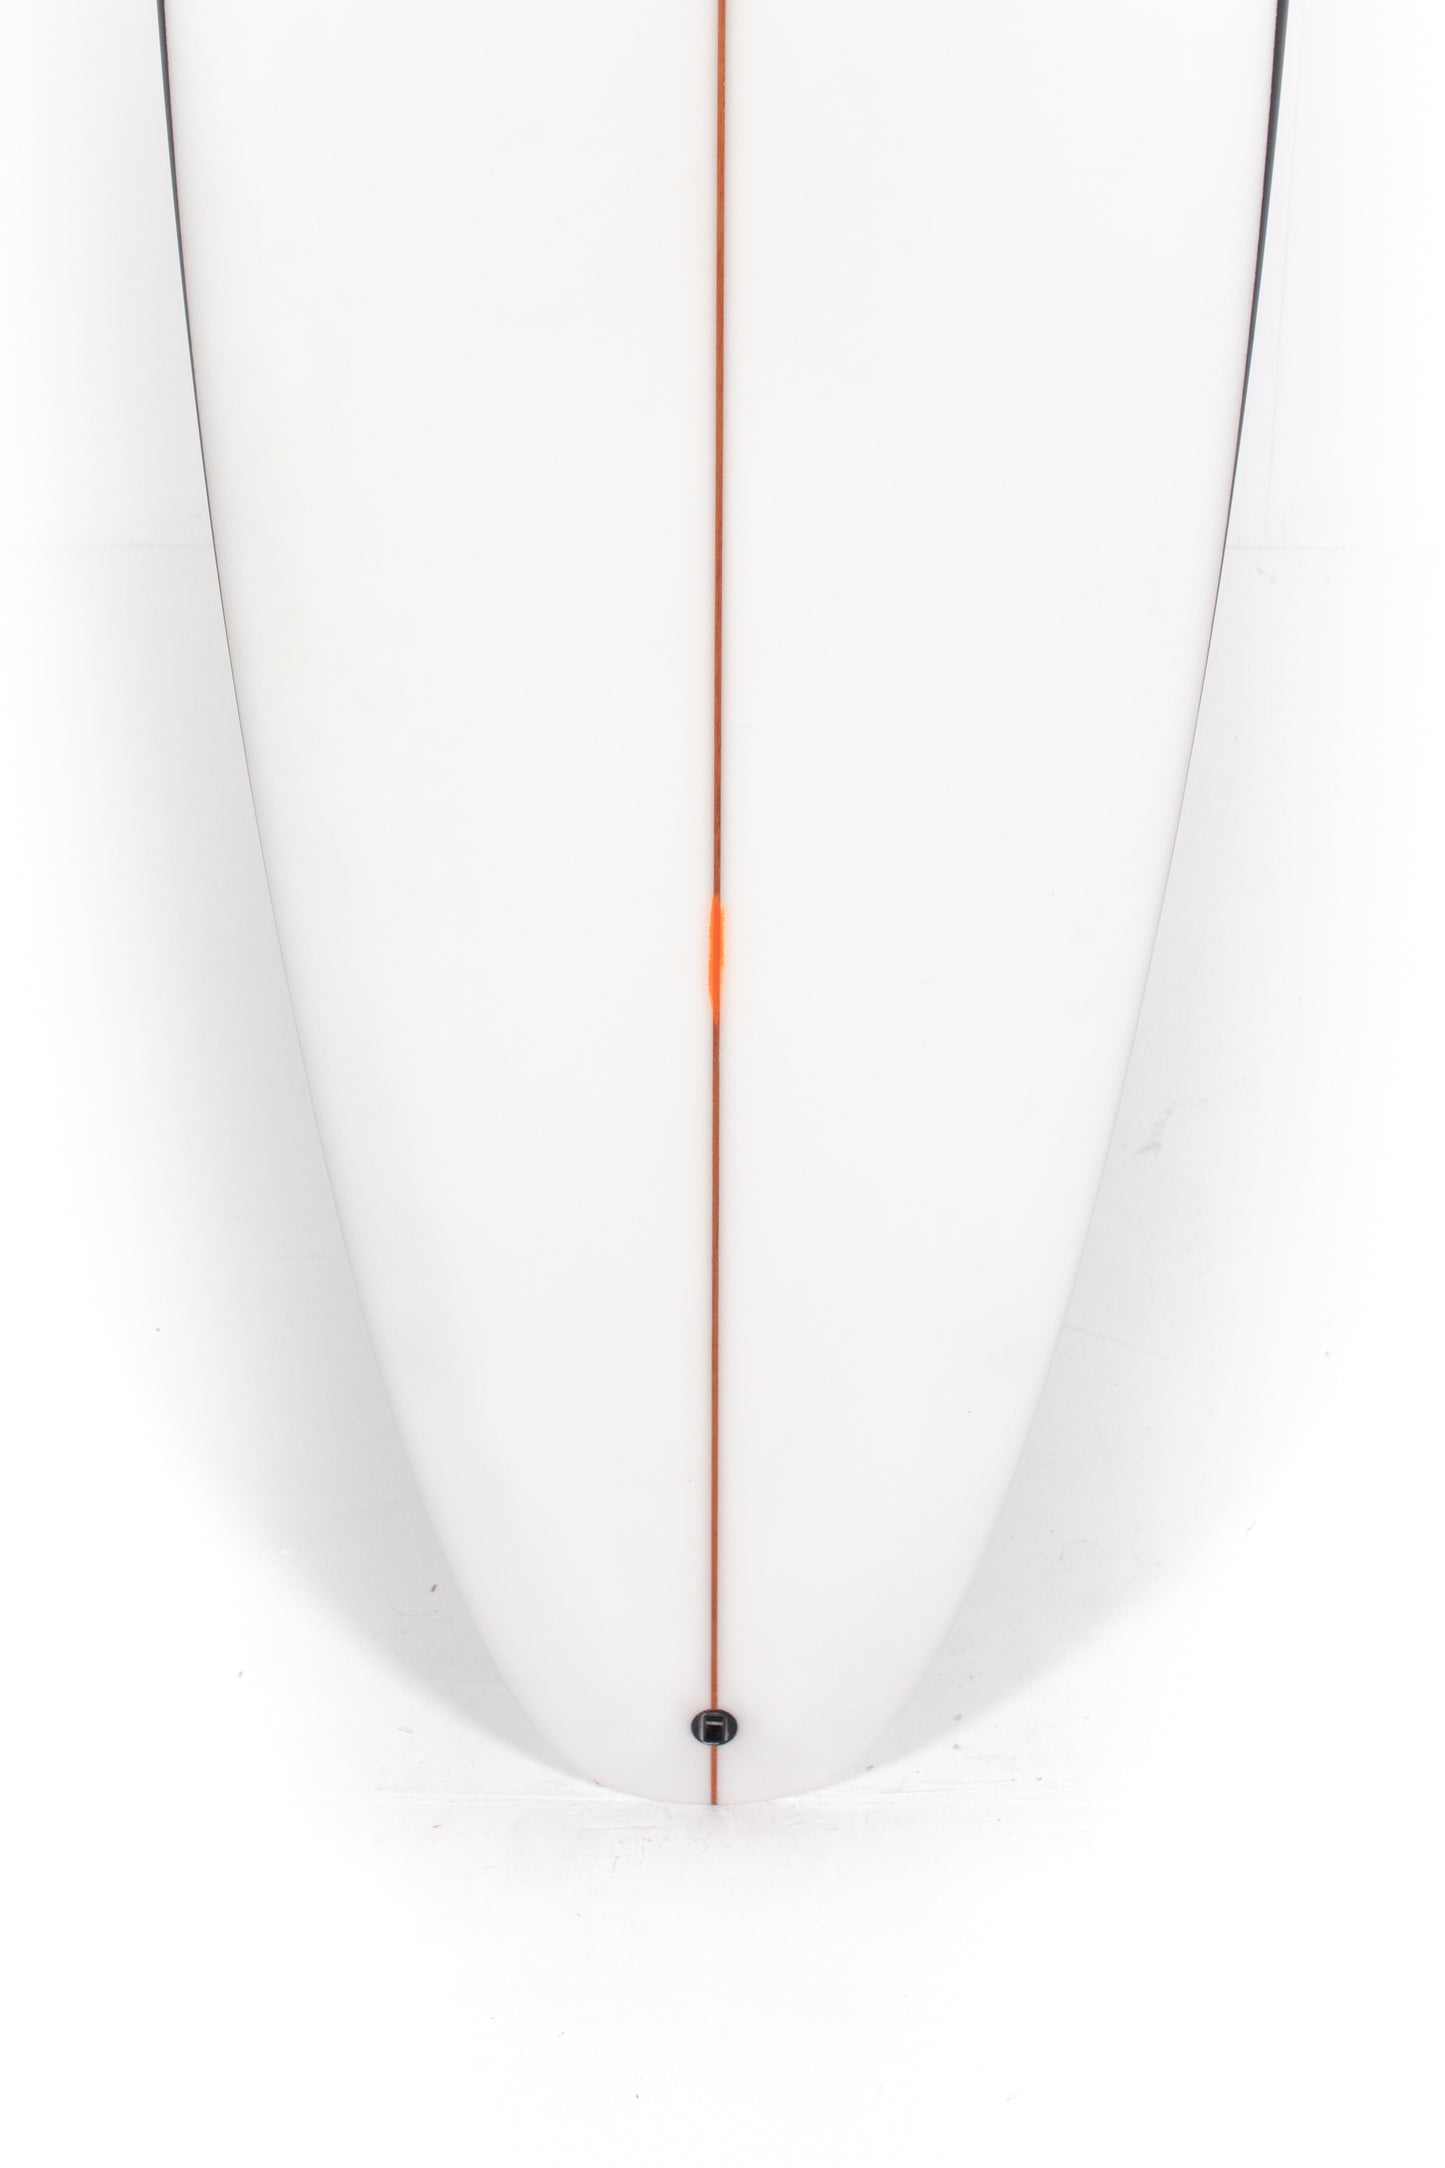 
                  
                    Christenson Surfboards - TWIN TRACKER - 6'10" x 21 x 2 3/4 - CX03829
                  
                